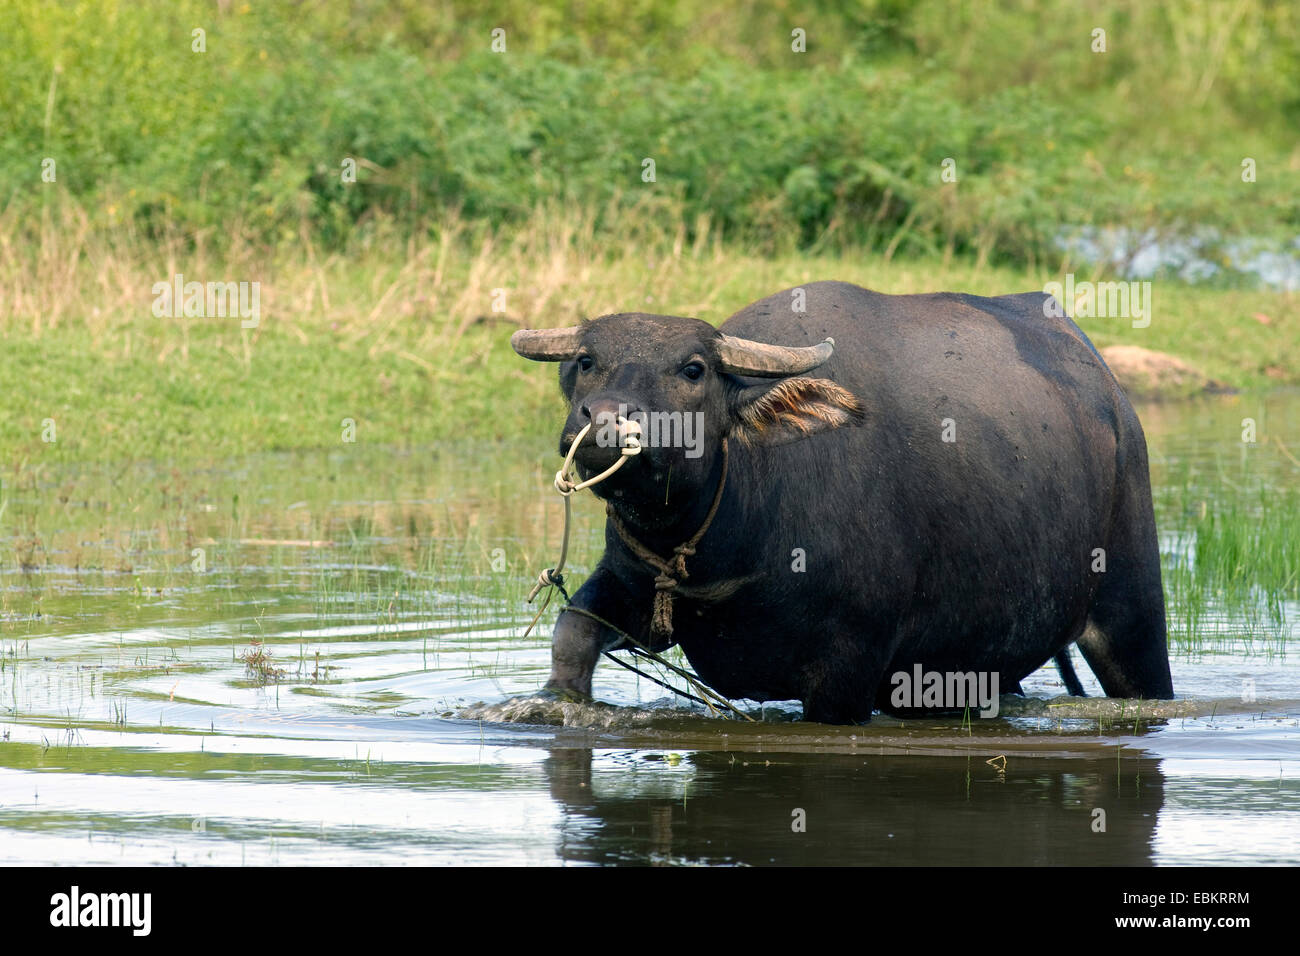 Asian water buffalo, wild water buffalo, carabao (Bubalus bubalis, Bubalus arnee), in water with a rope through the nose, Malaysia, Lankawi Stock Photo